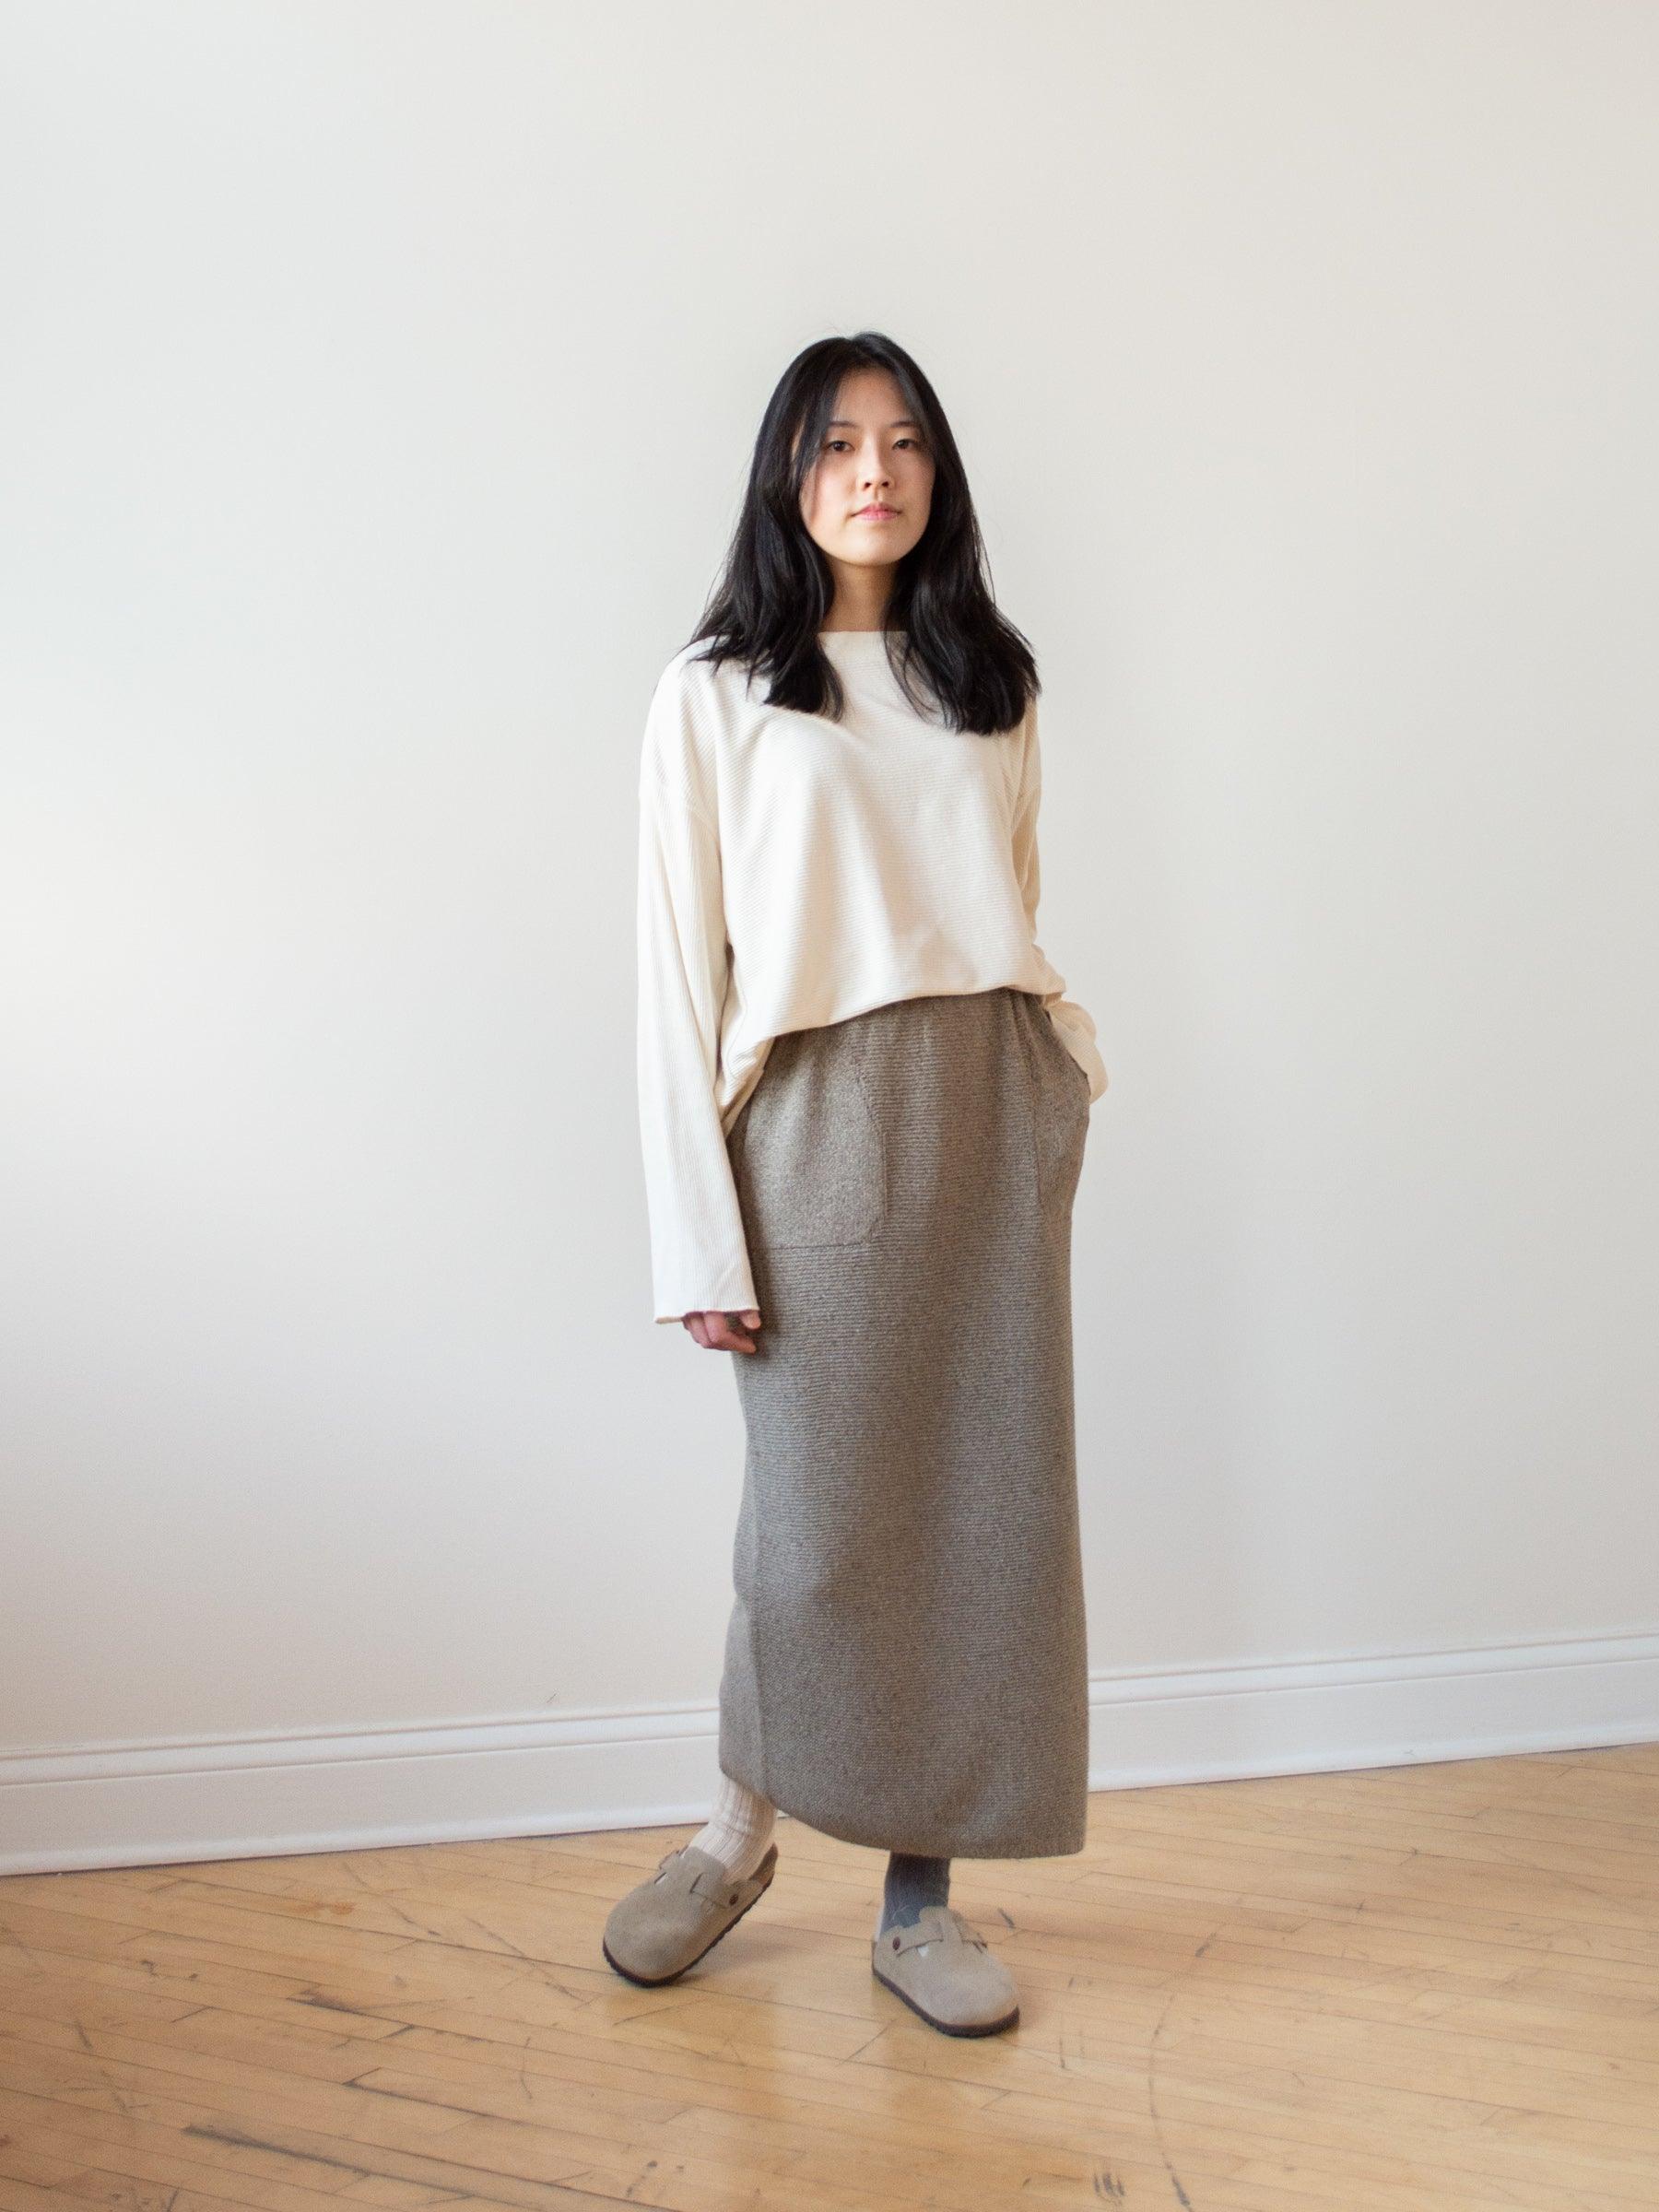 Namu Shop - Unfil Mulberry & Raw Silk Knit Skirt